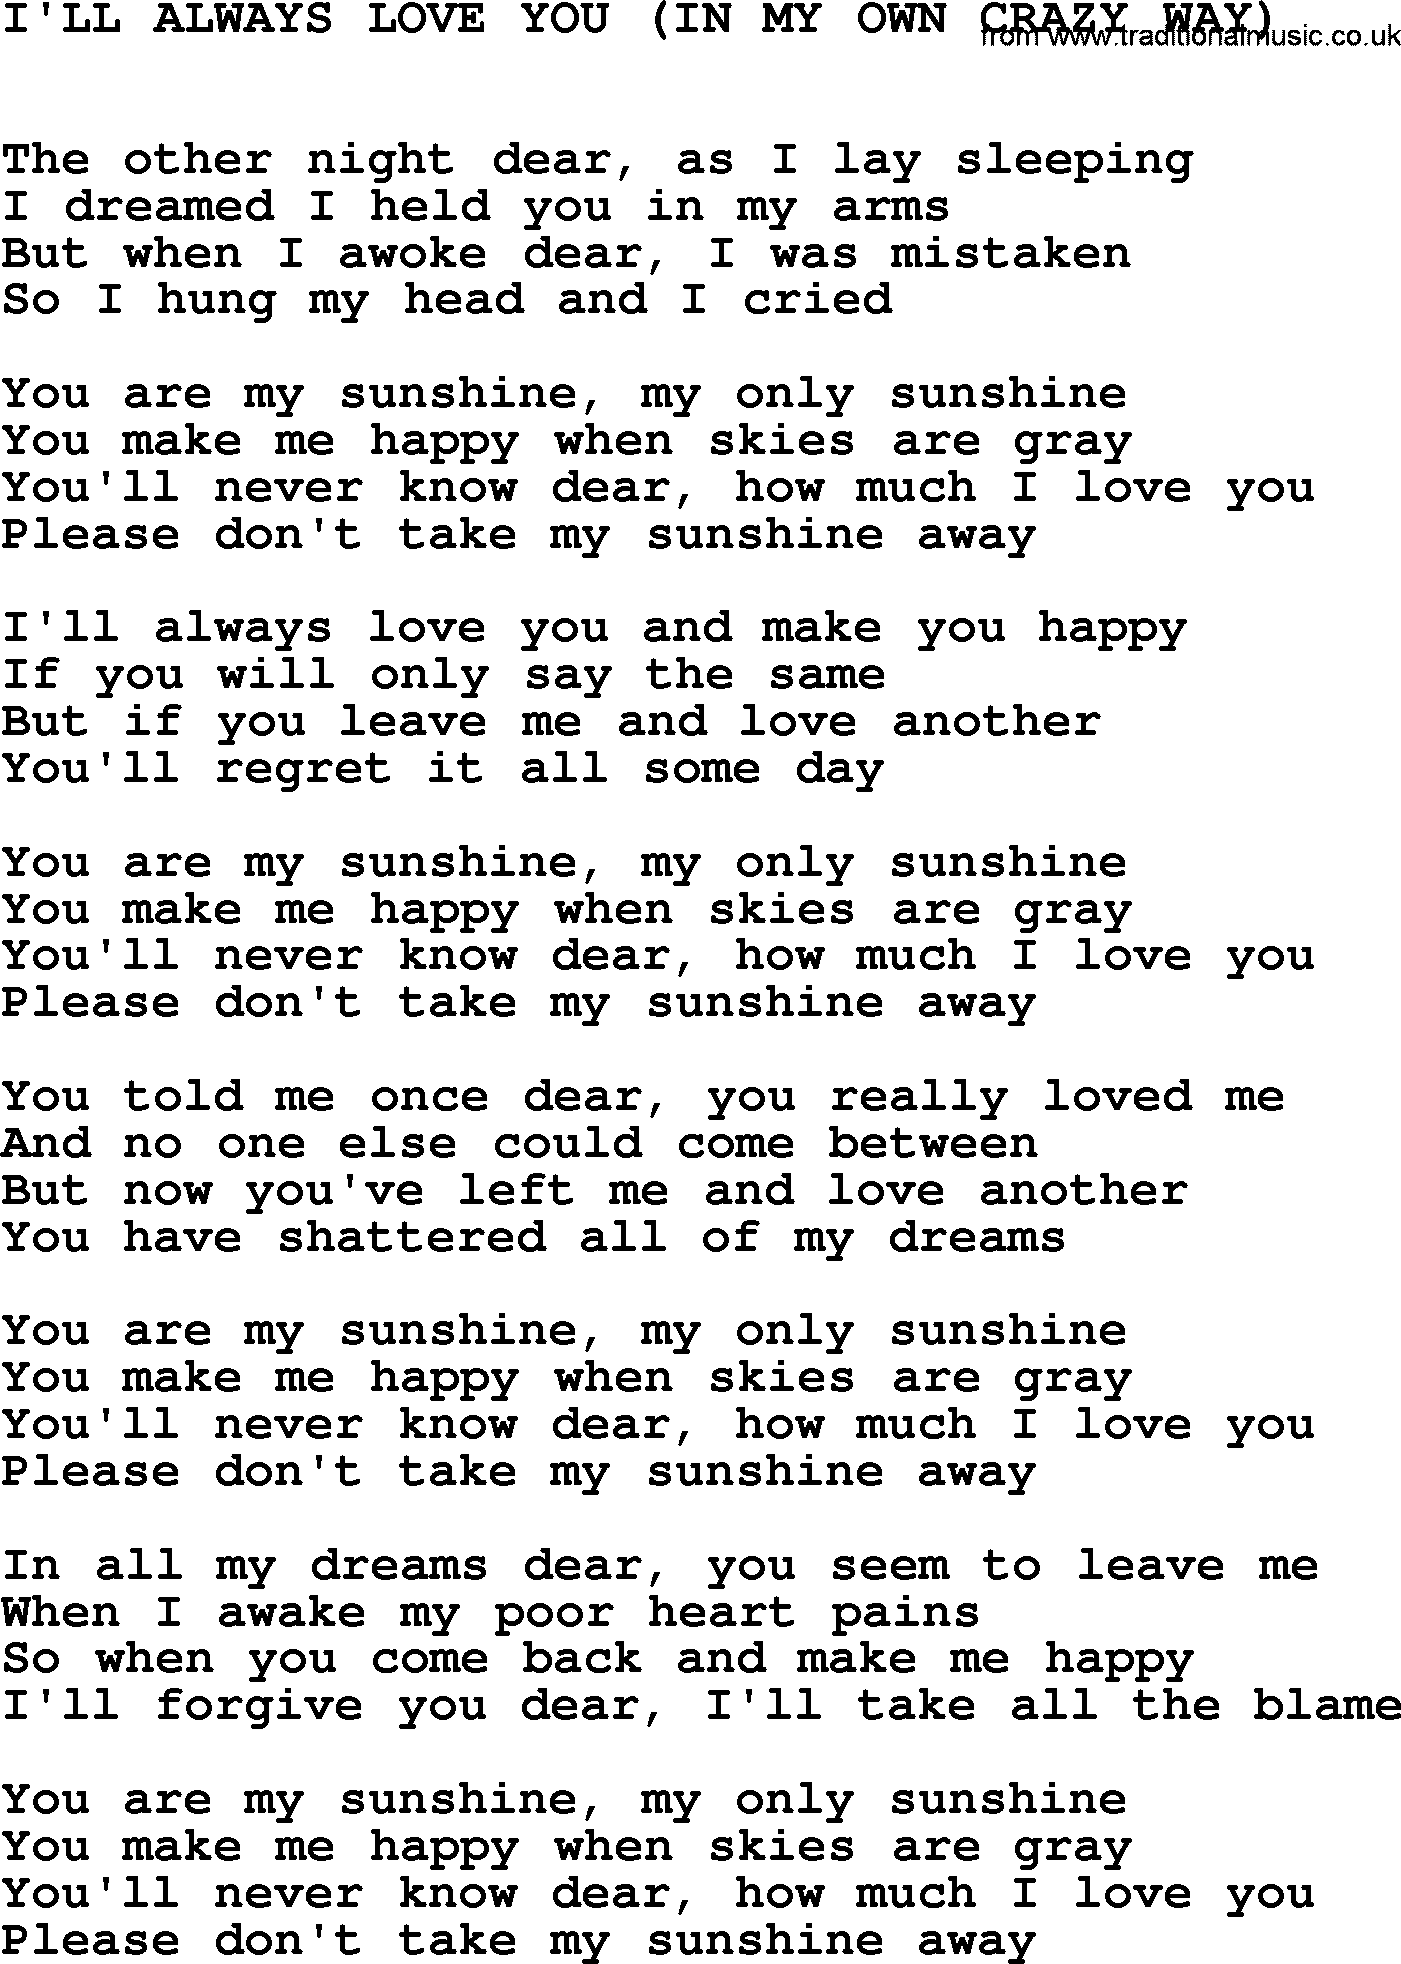 Johnny Cash song I'll Always Love You(In My Own Crazy Way).txt lyrics